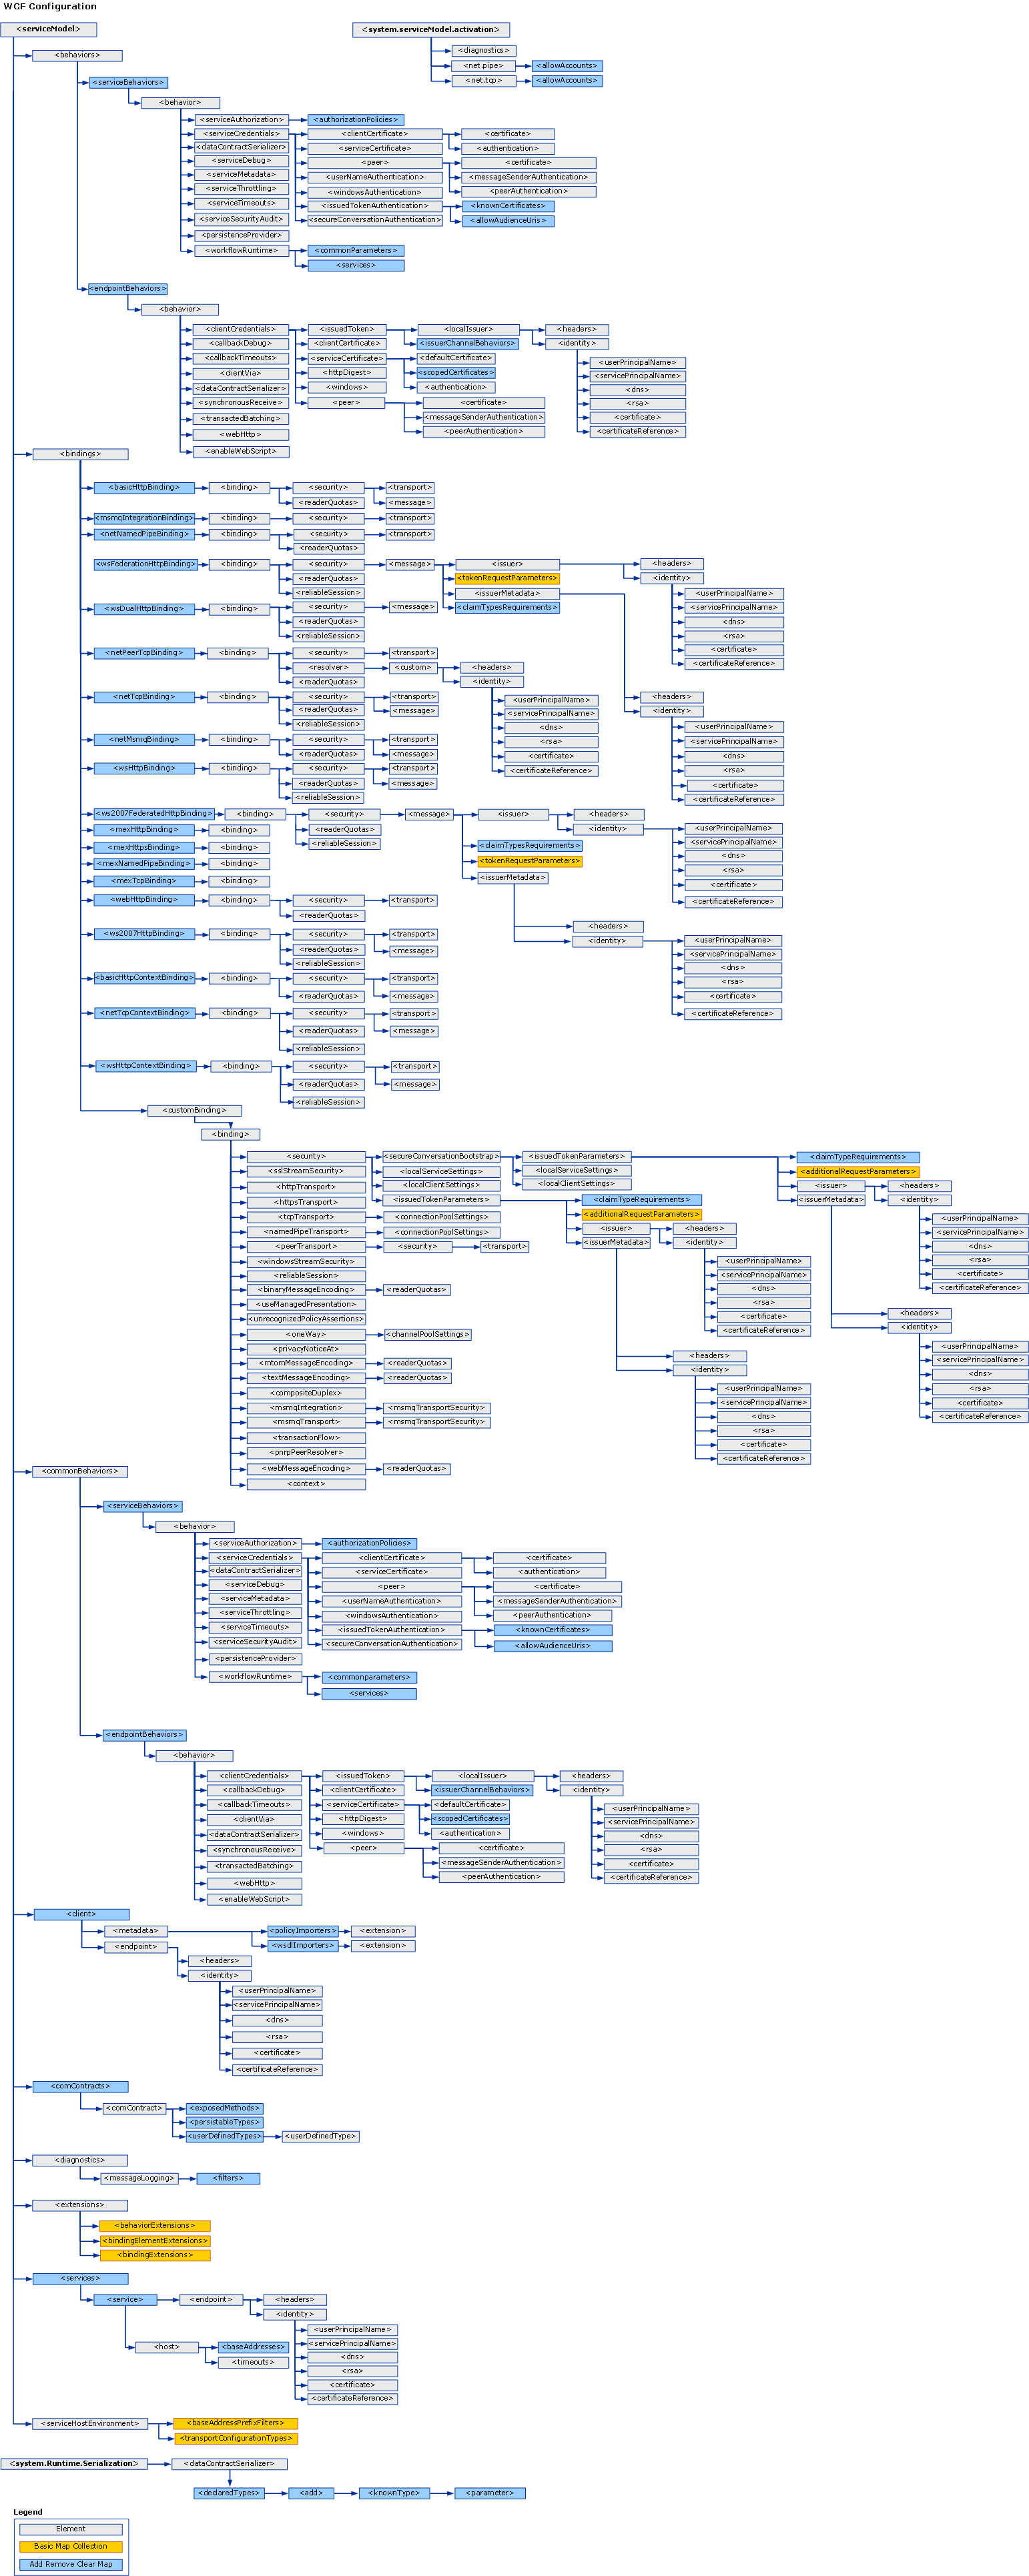 Diagram that shows the WCF configuration schema.